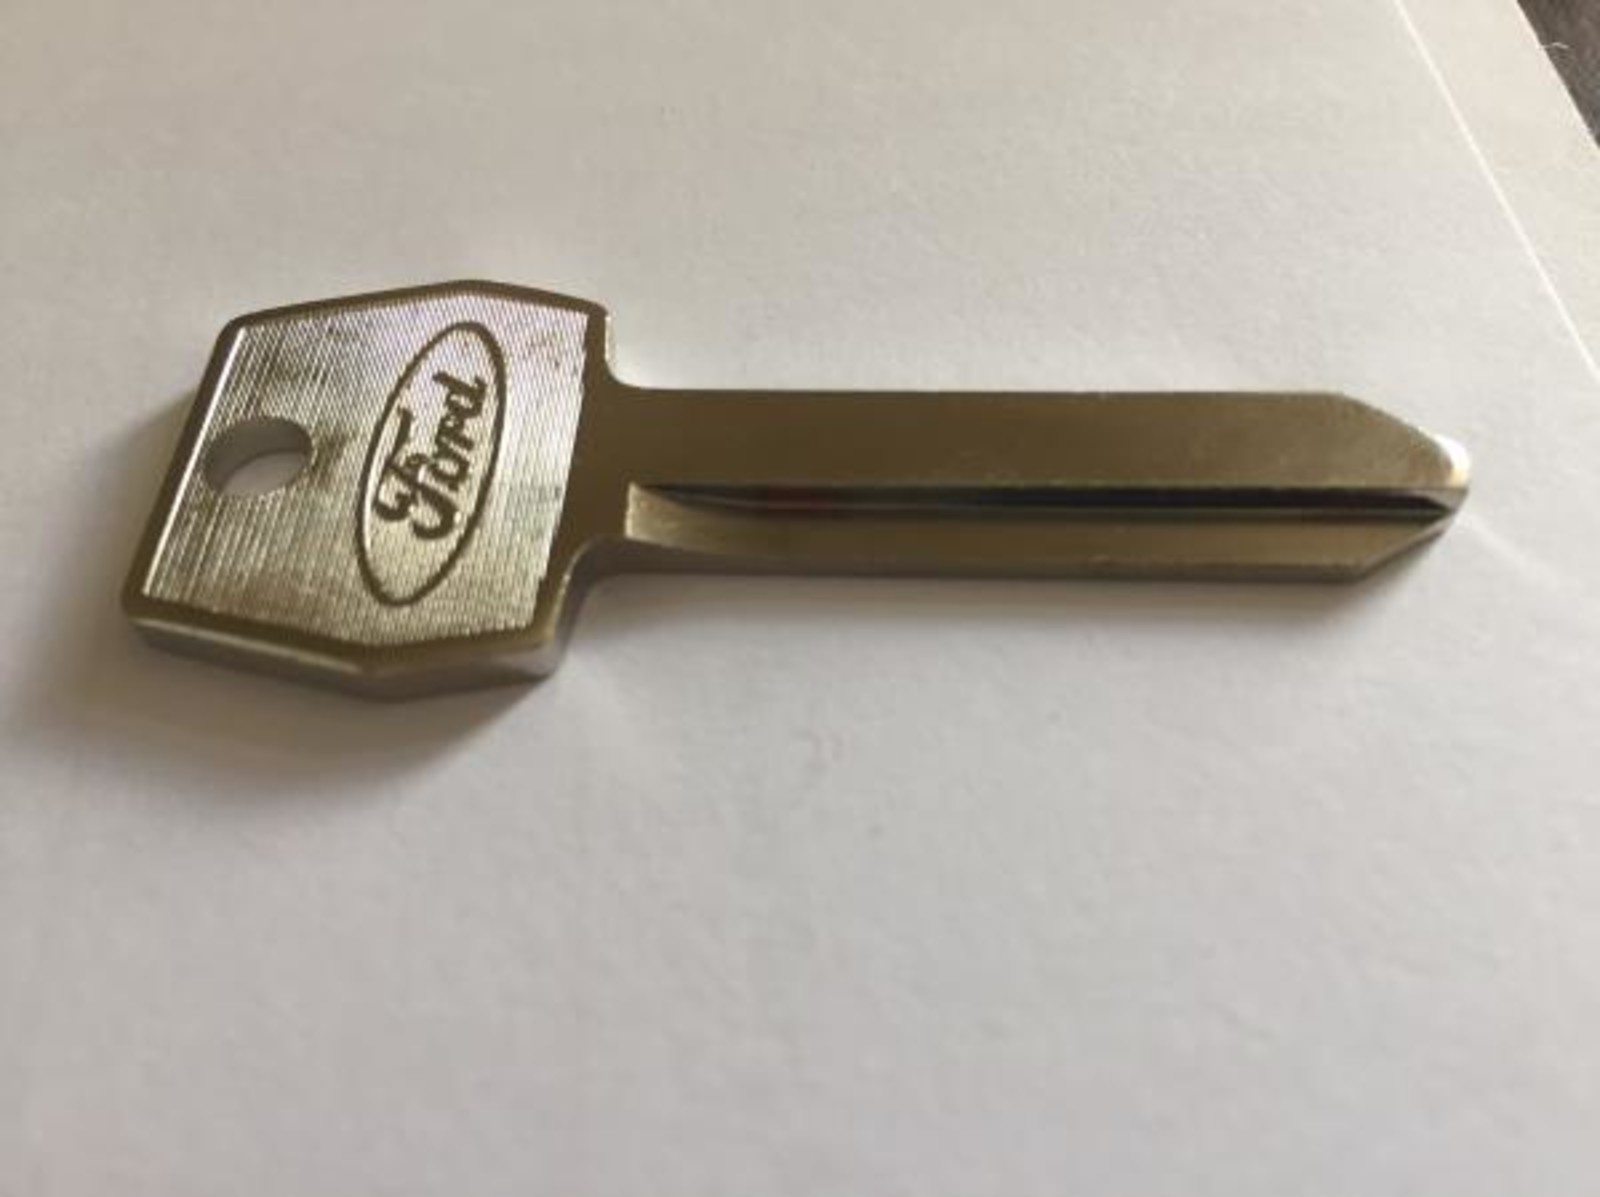 67-73 Blank Ford Door/Ignition Key (STD)